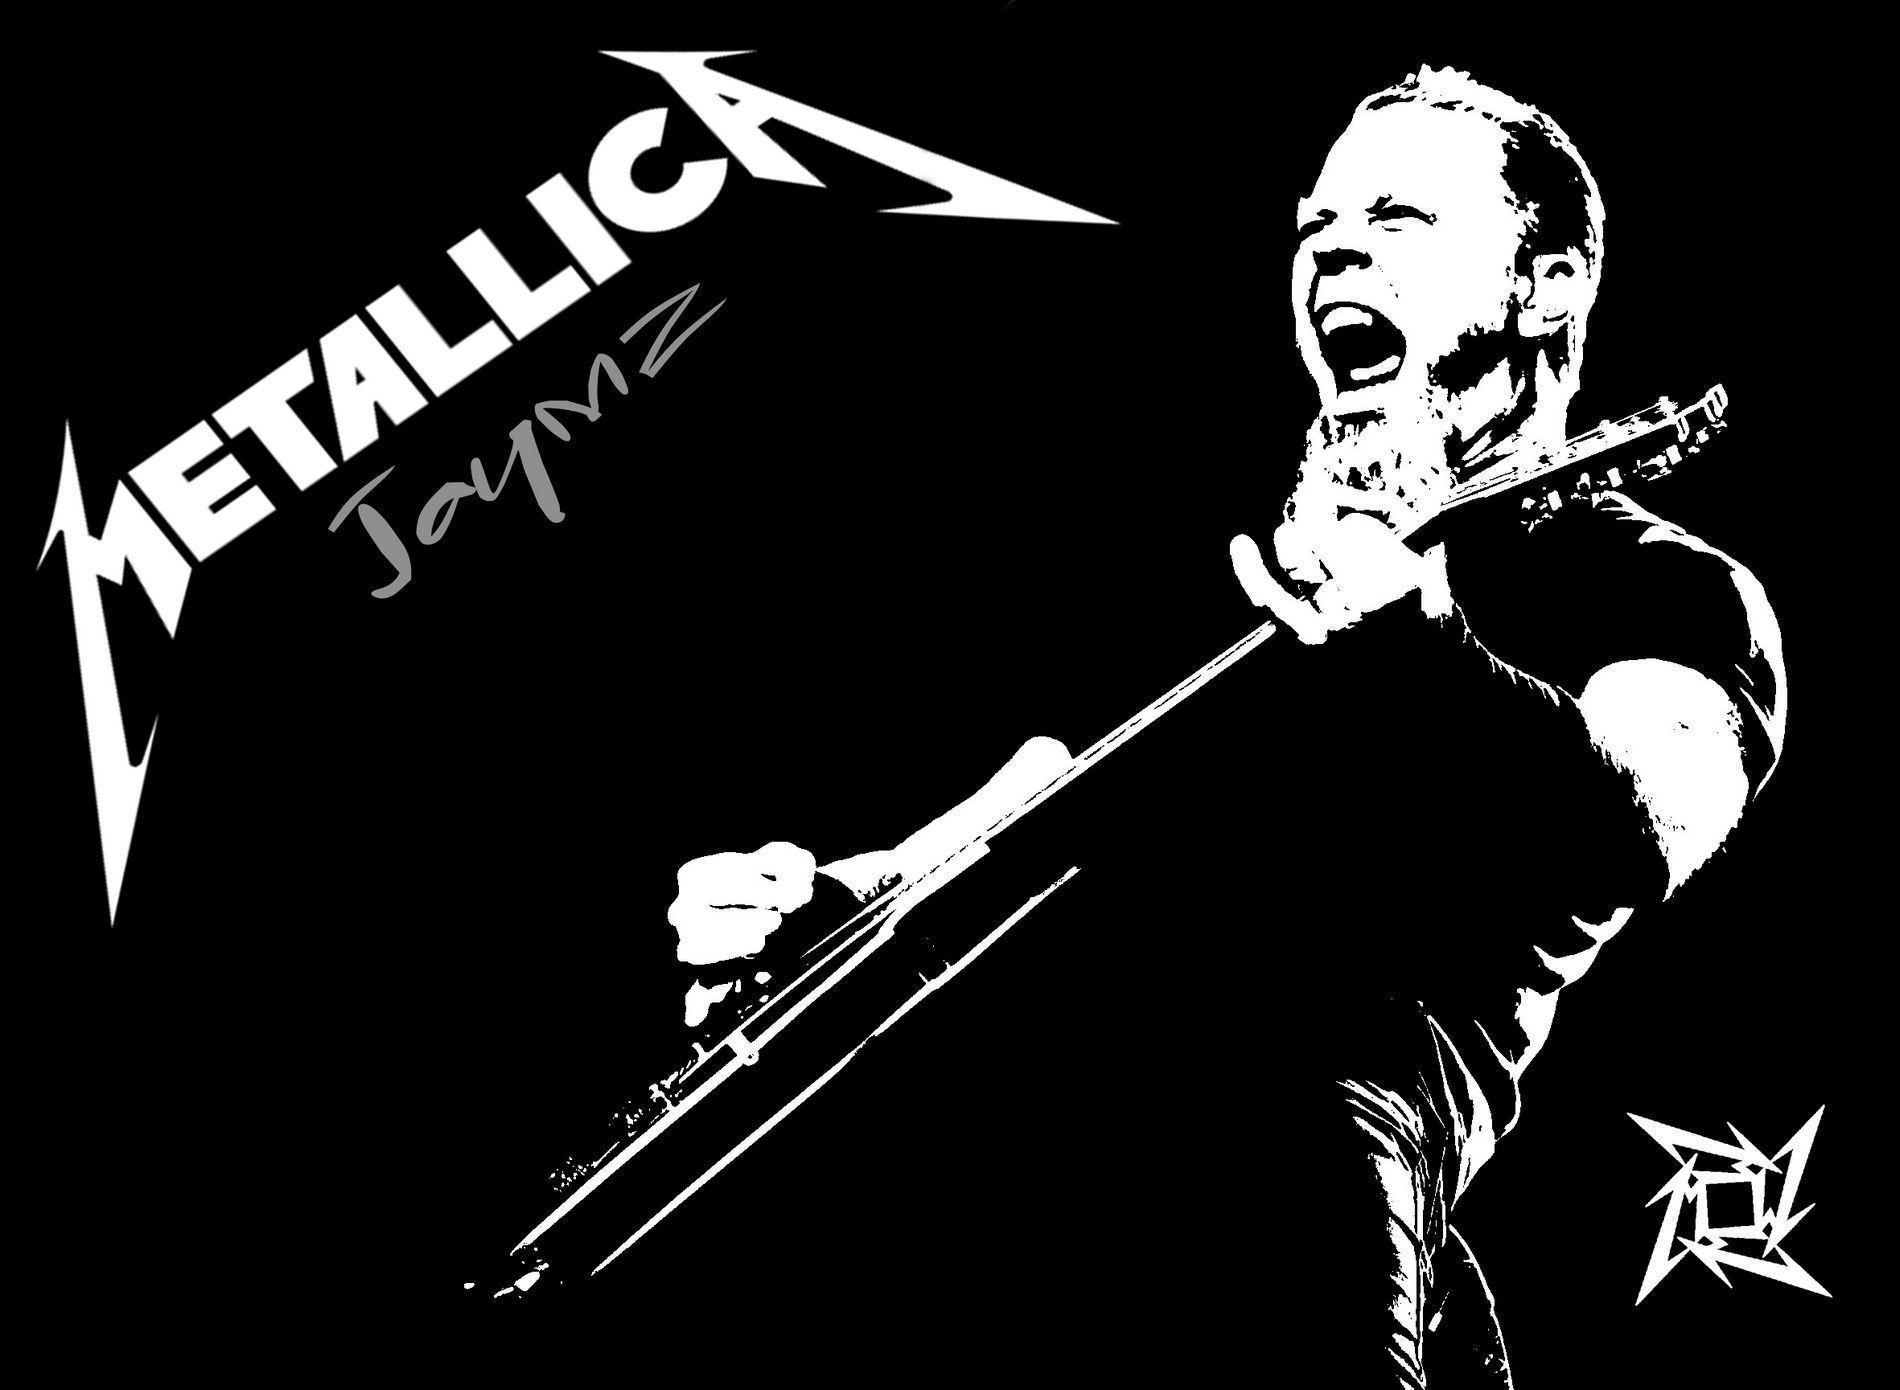 Metallica Wallpaper. Sky HD Wallpaper